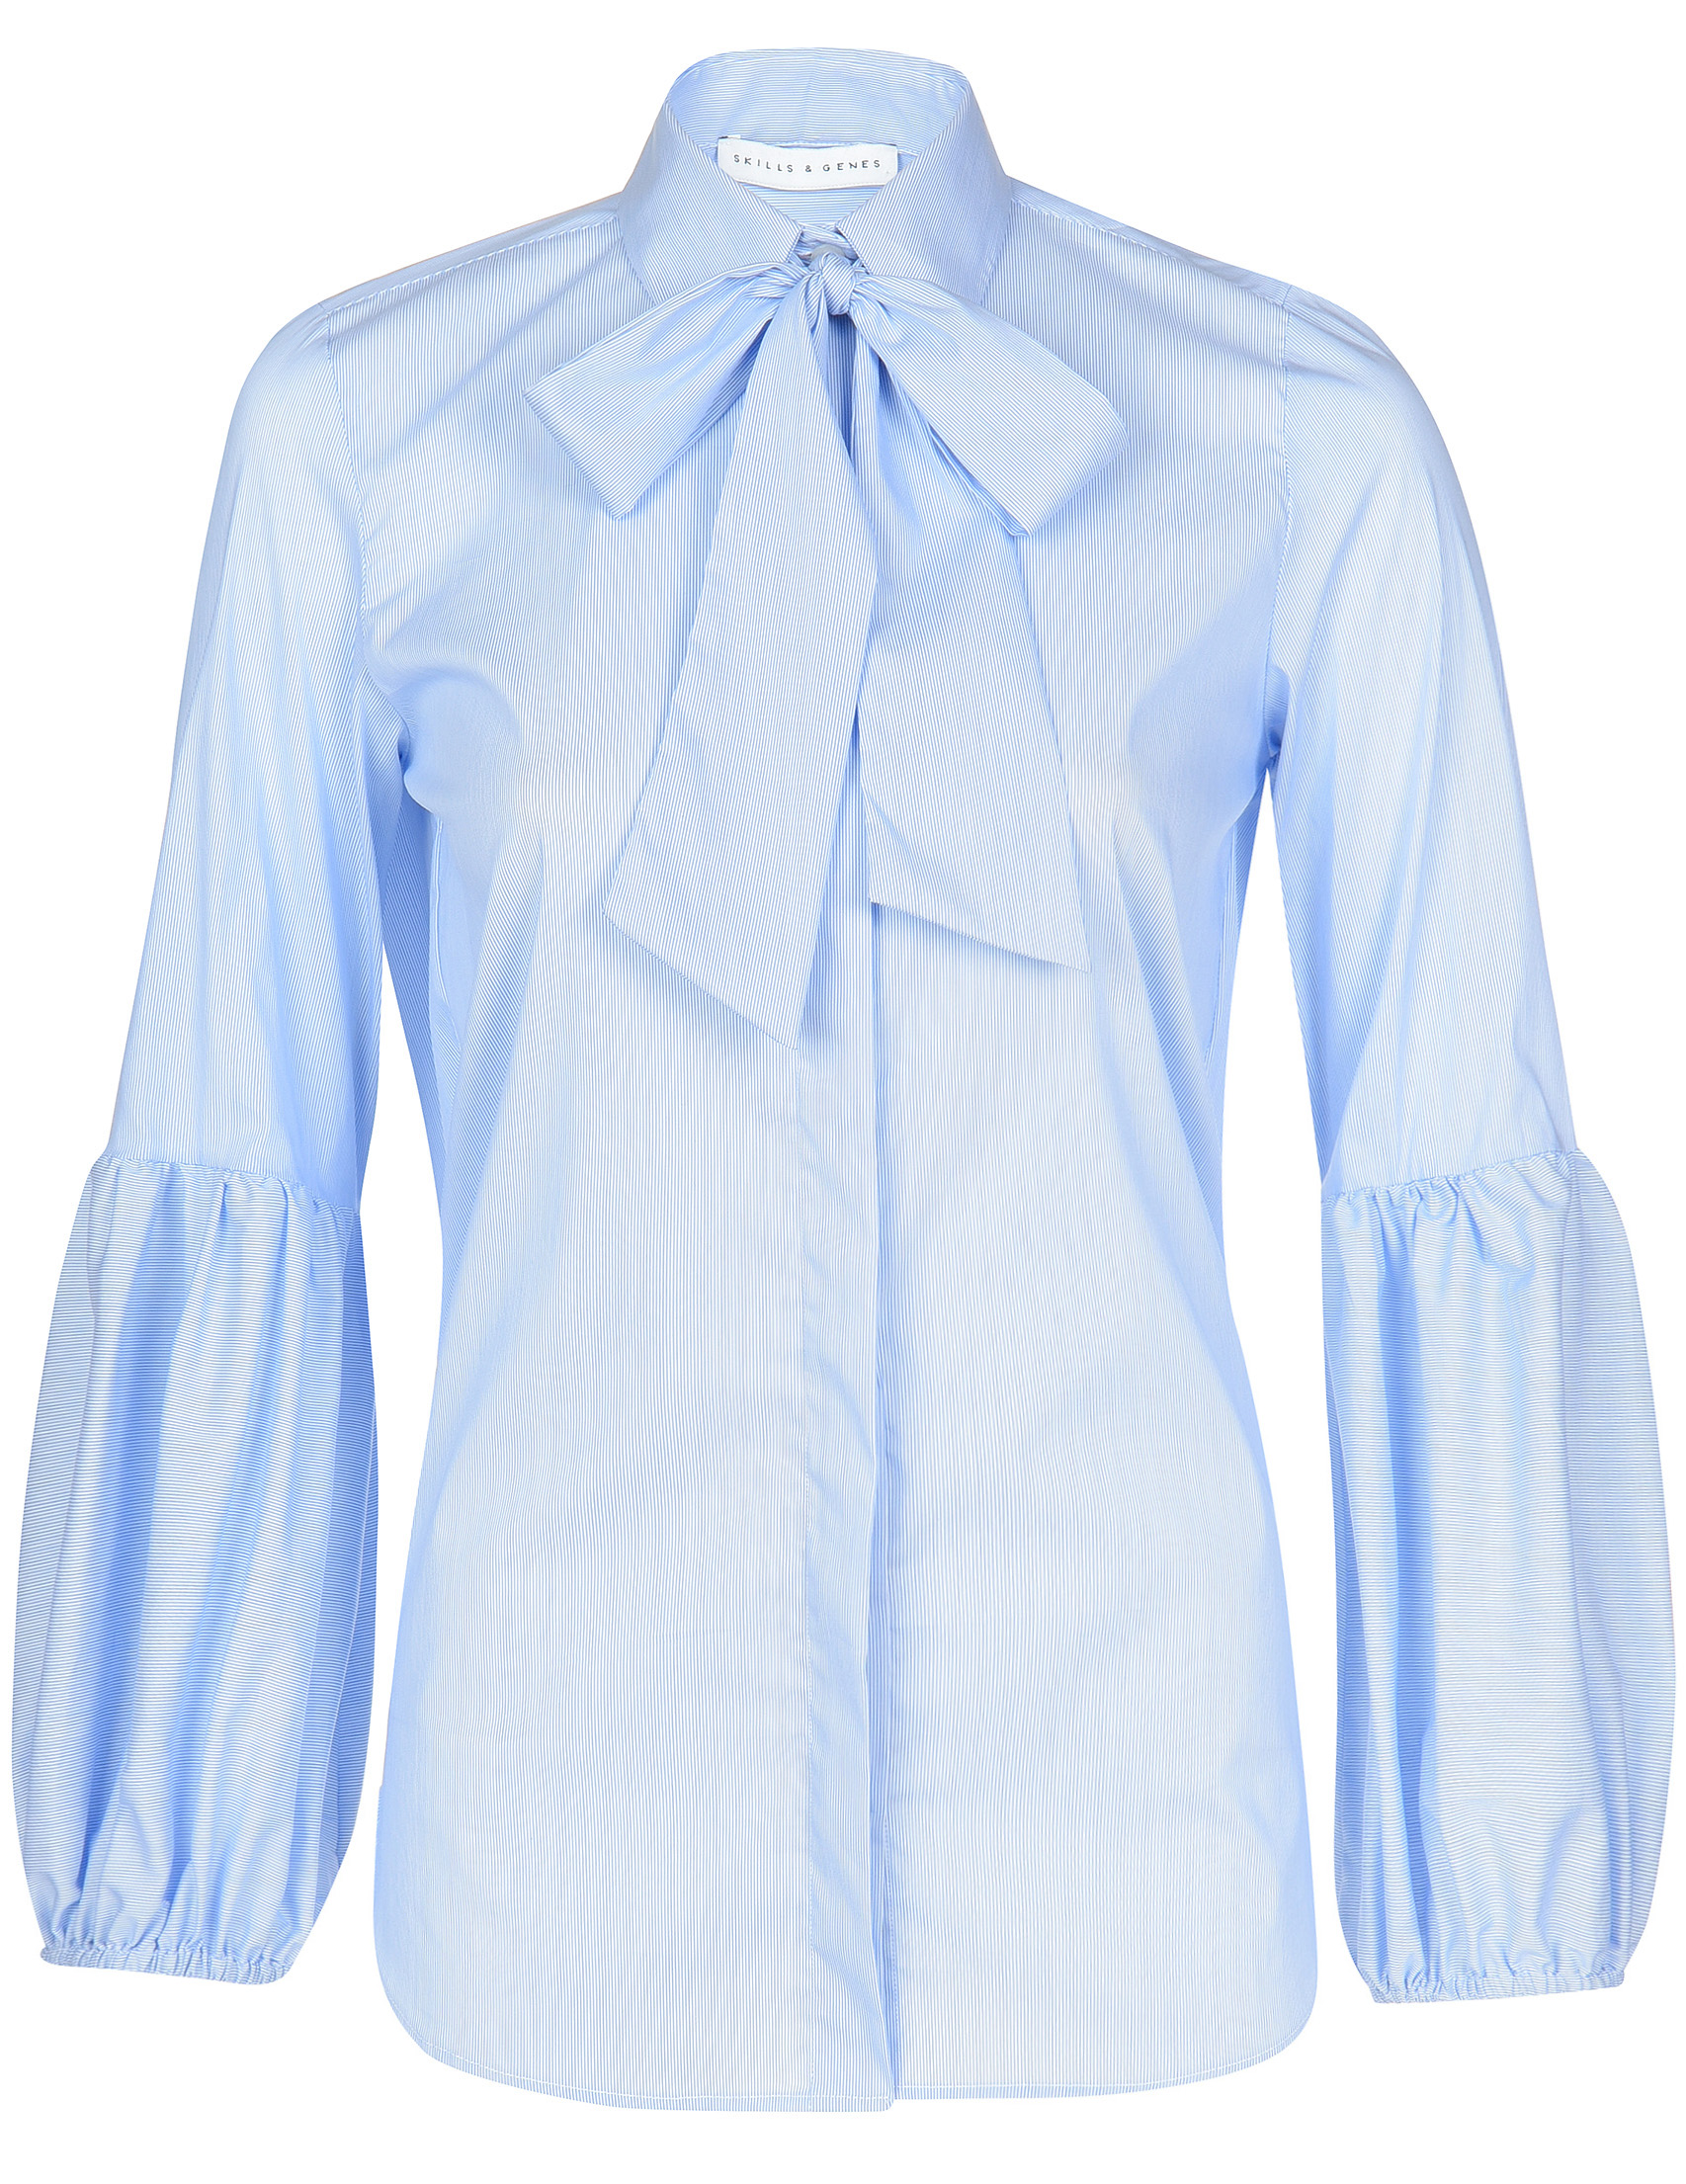 Женская блуза SKILLS  GENES S016C04-730_blue